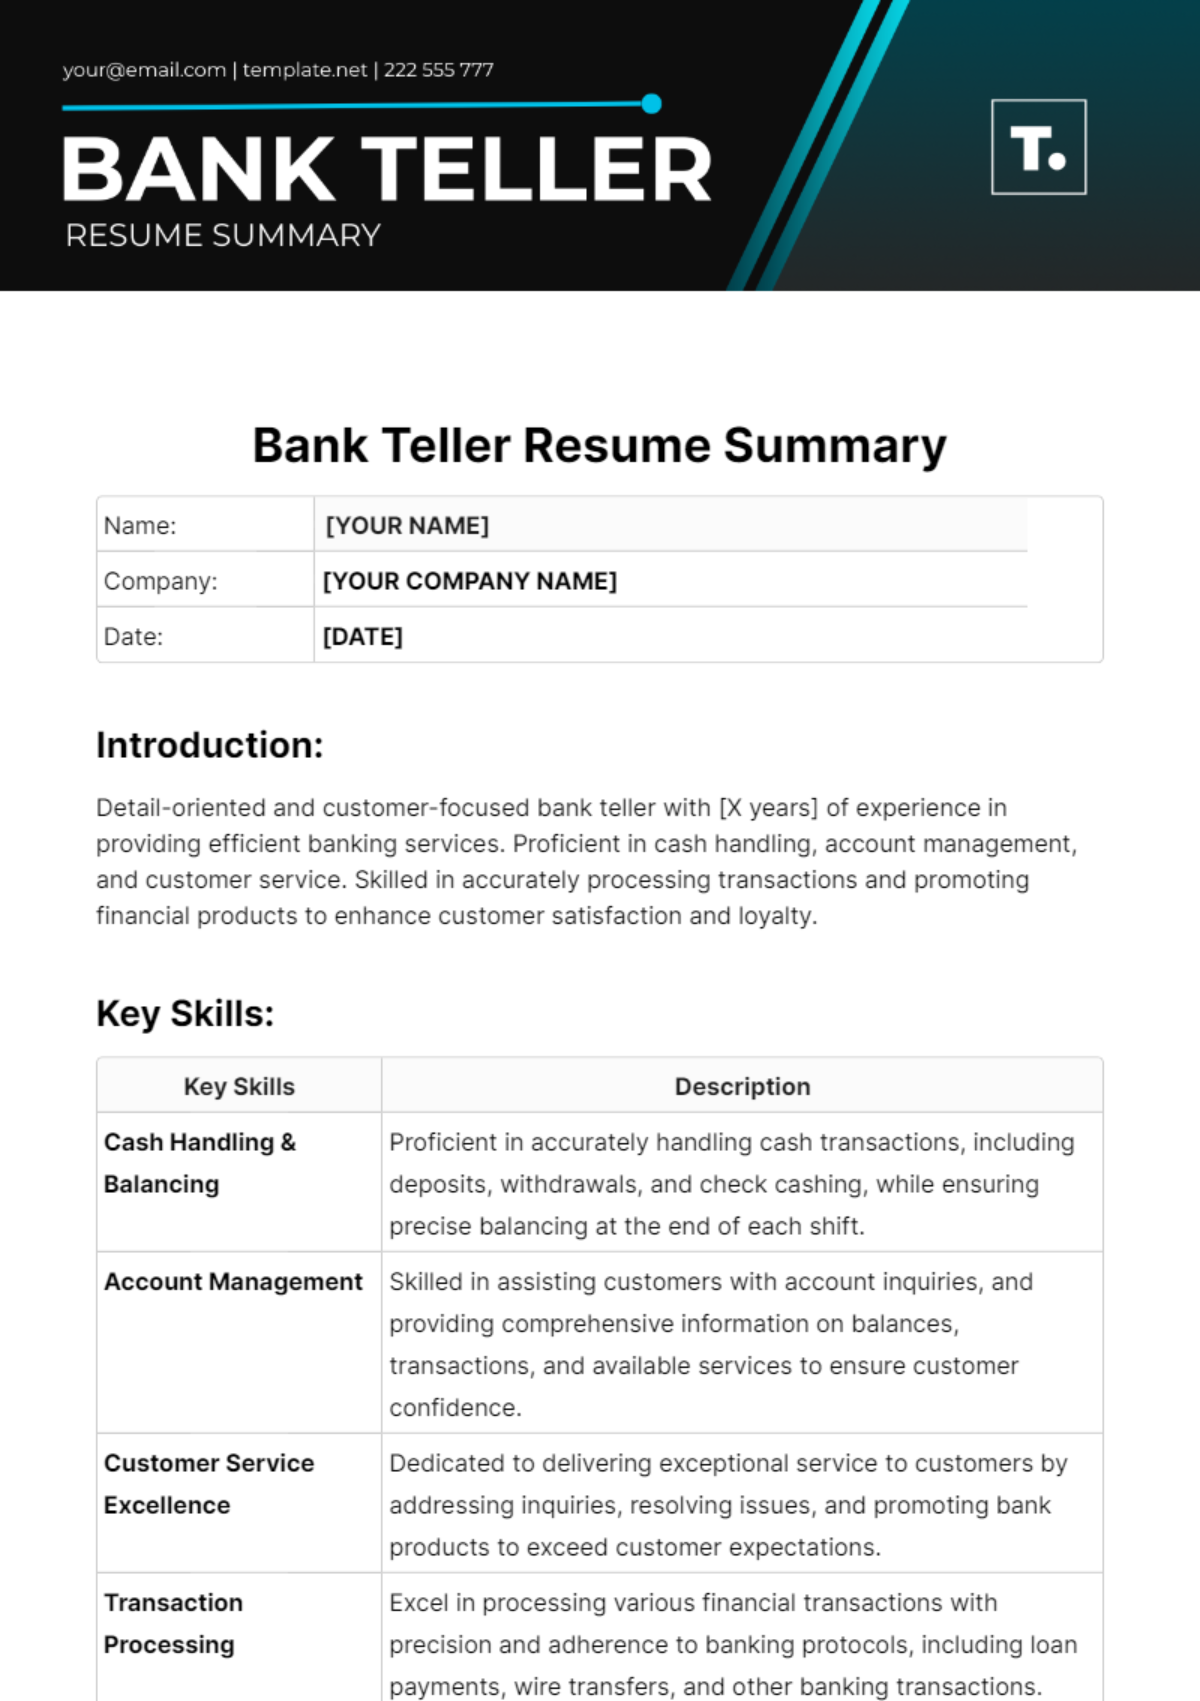 Bank Teller Resume Summary Template